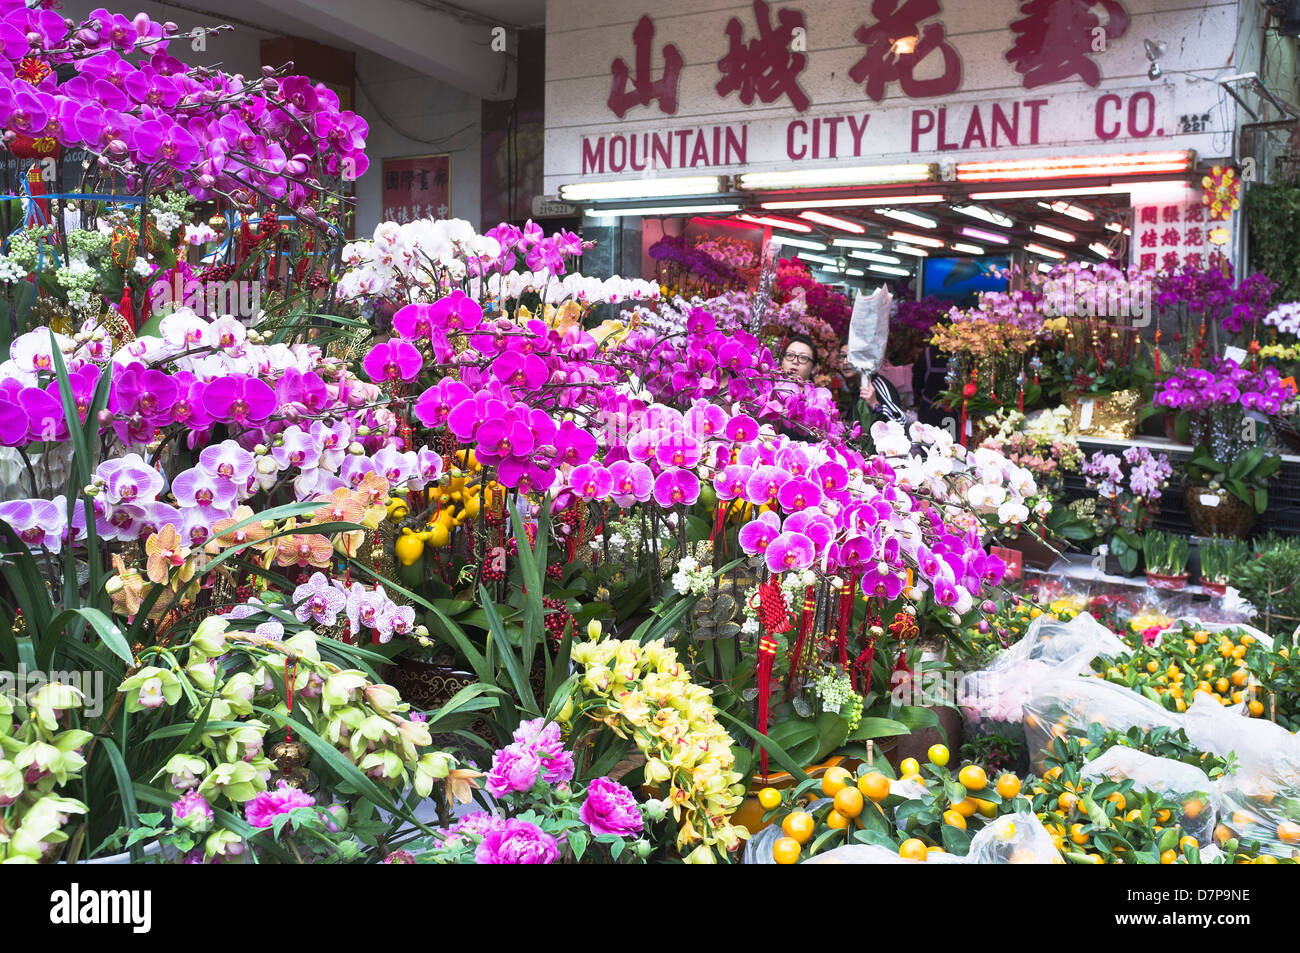 dh Flower Market MONG KOK HONG KONG Chinese New Year flowers decoration market stall display mongkok floral shop exterior china Stock Photo